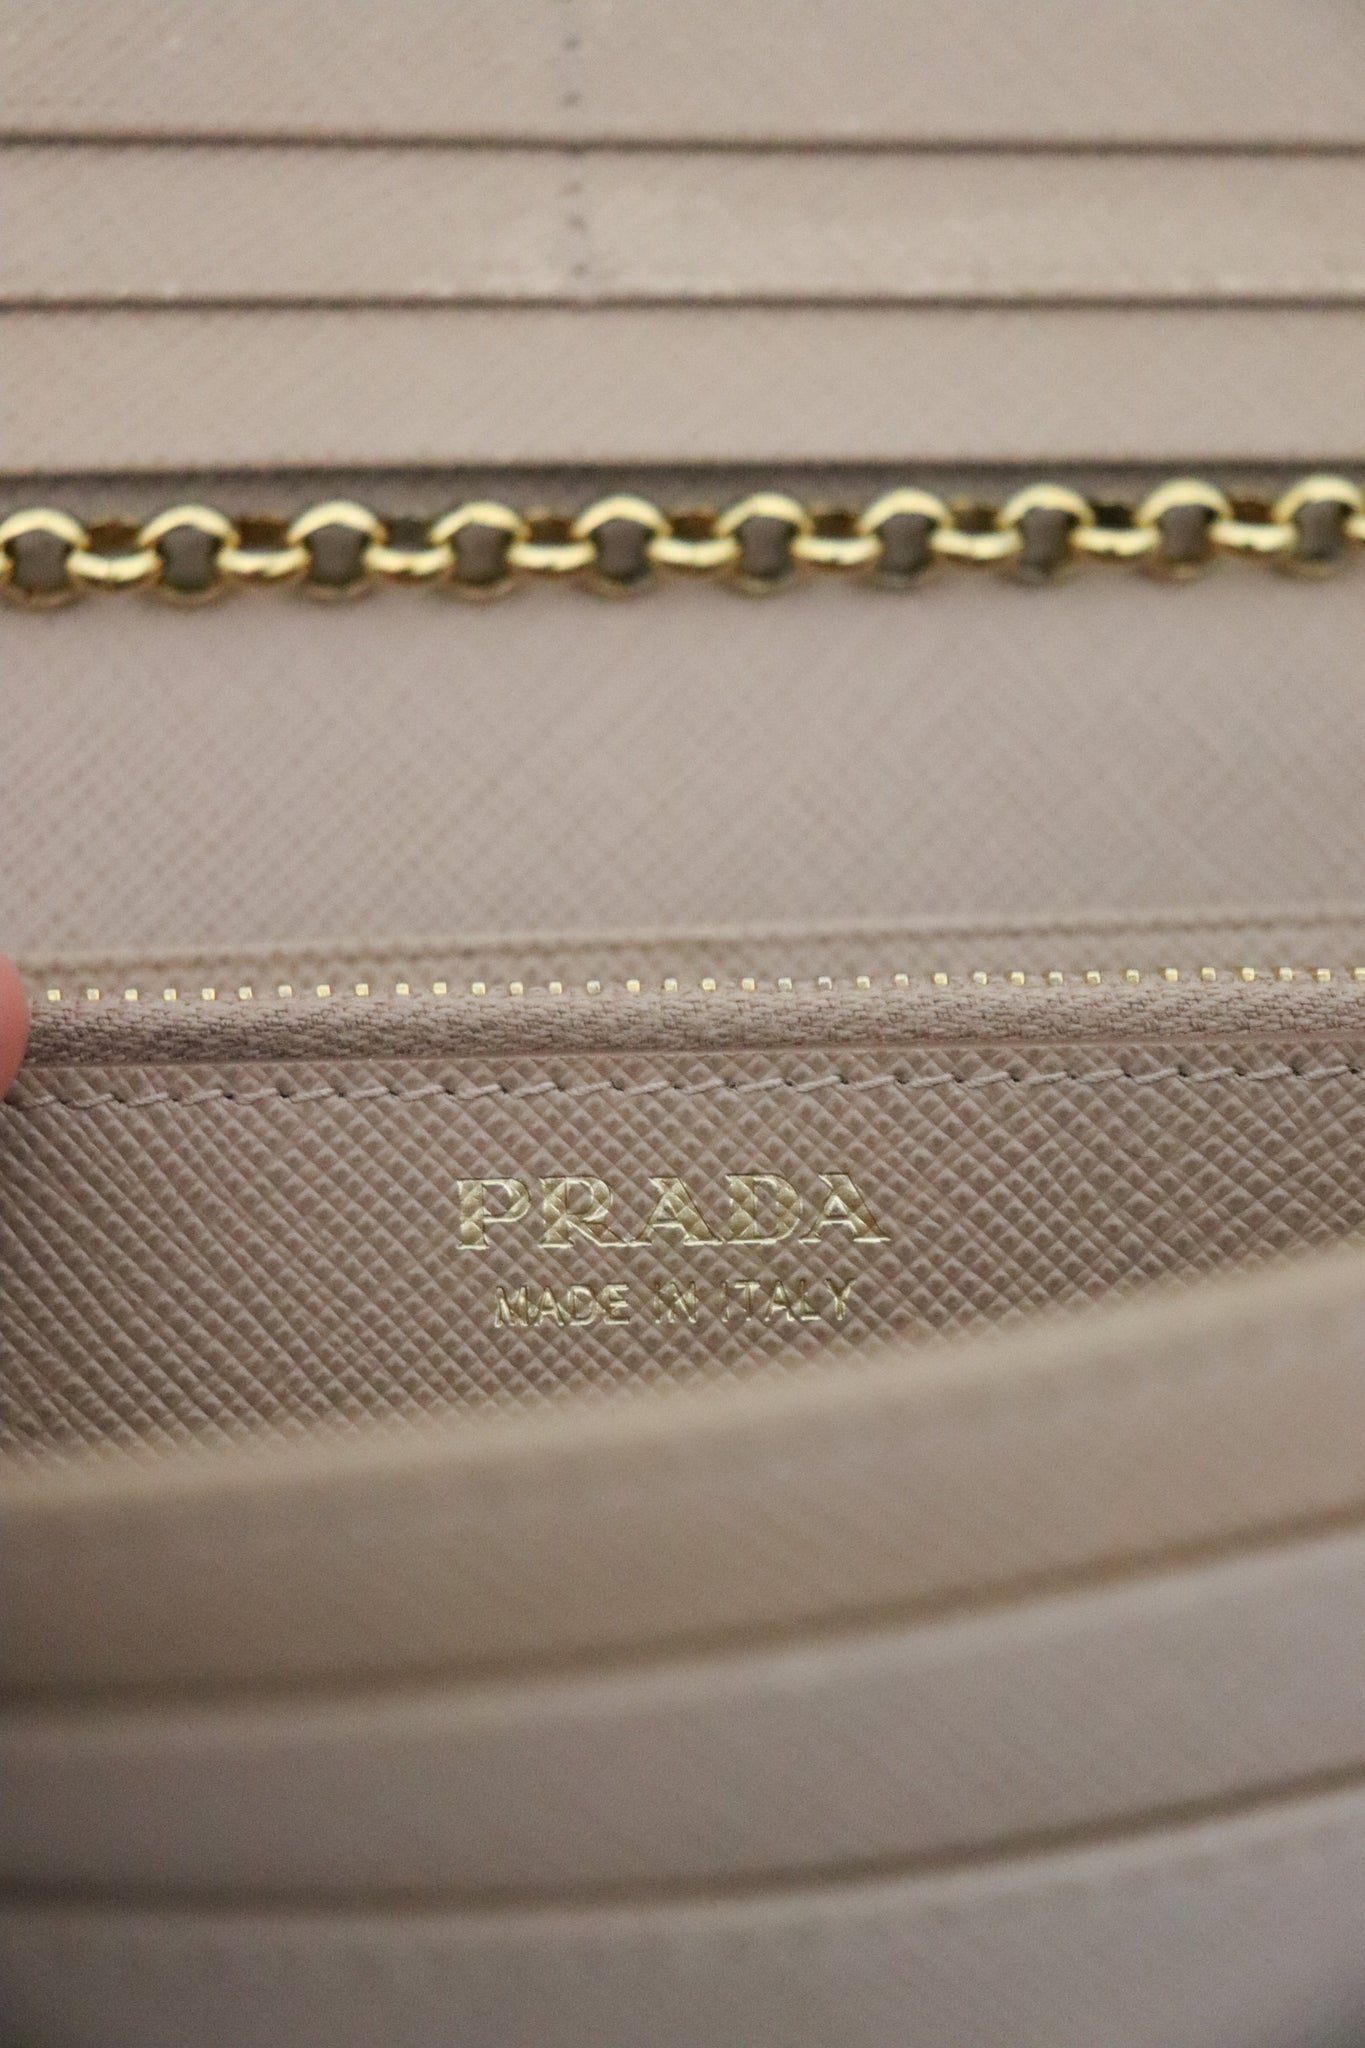 Prada Black Saffiano Leather Flap Wallet With Metal Bar Detail